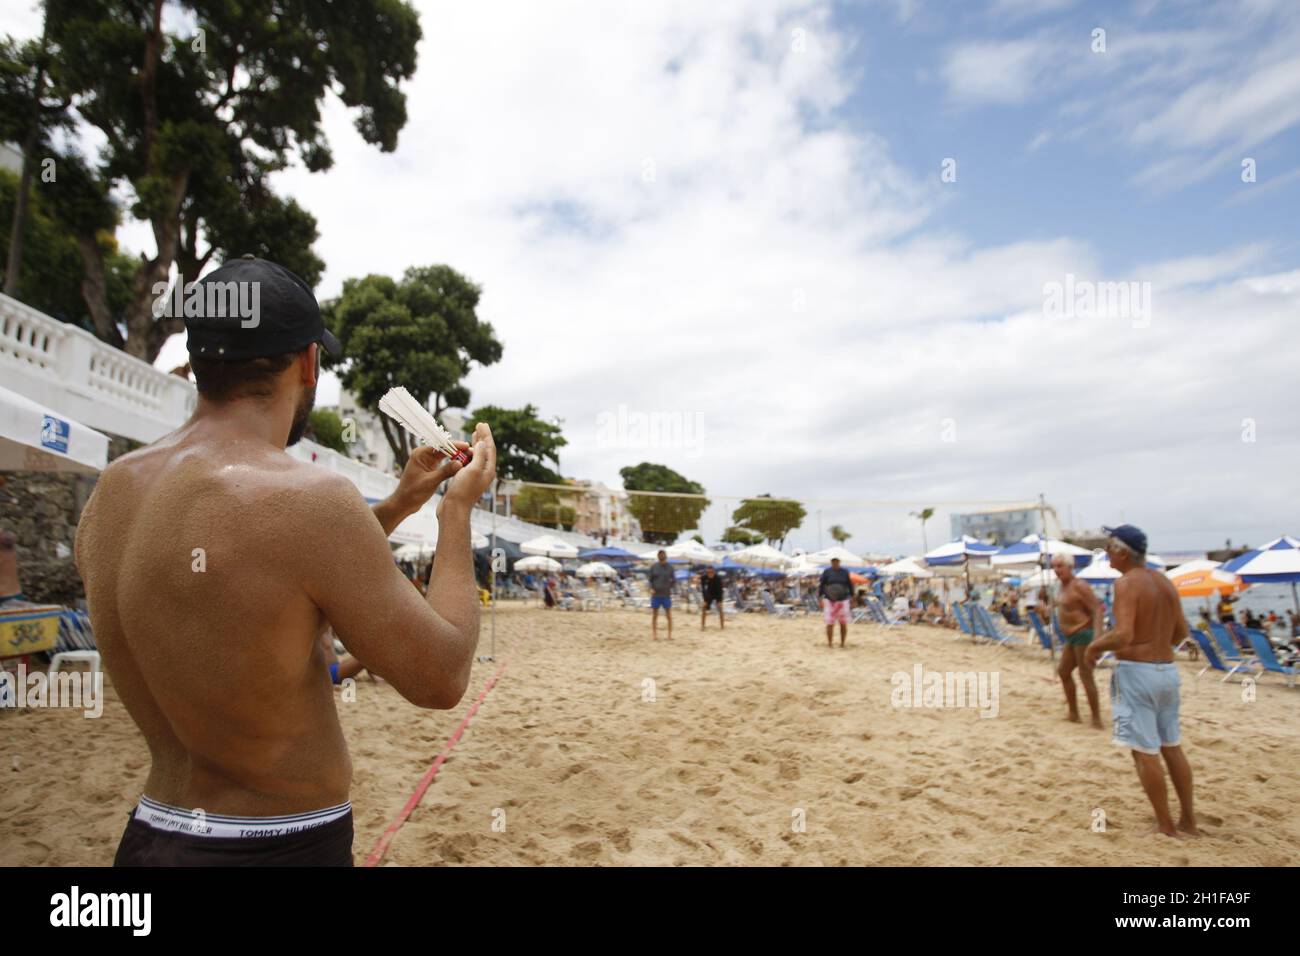 salvador, bahia / brazil - february 21, 2016: People are seen at the Porto da Barra beach in Salvador. *** Local Caption *** Stock Photo